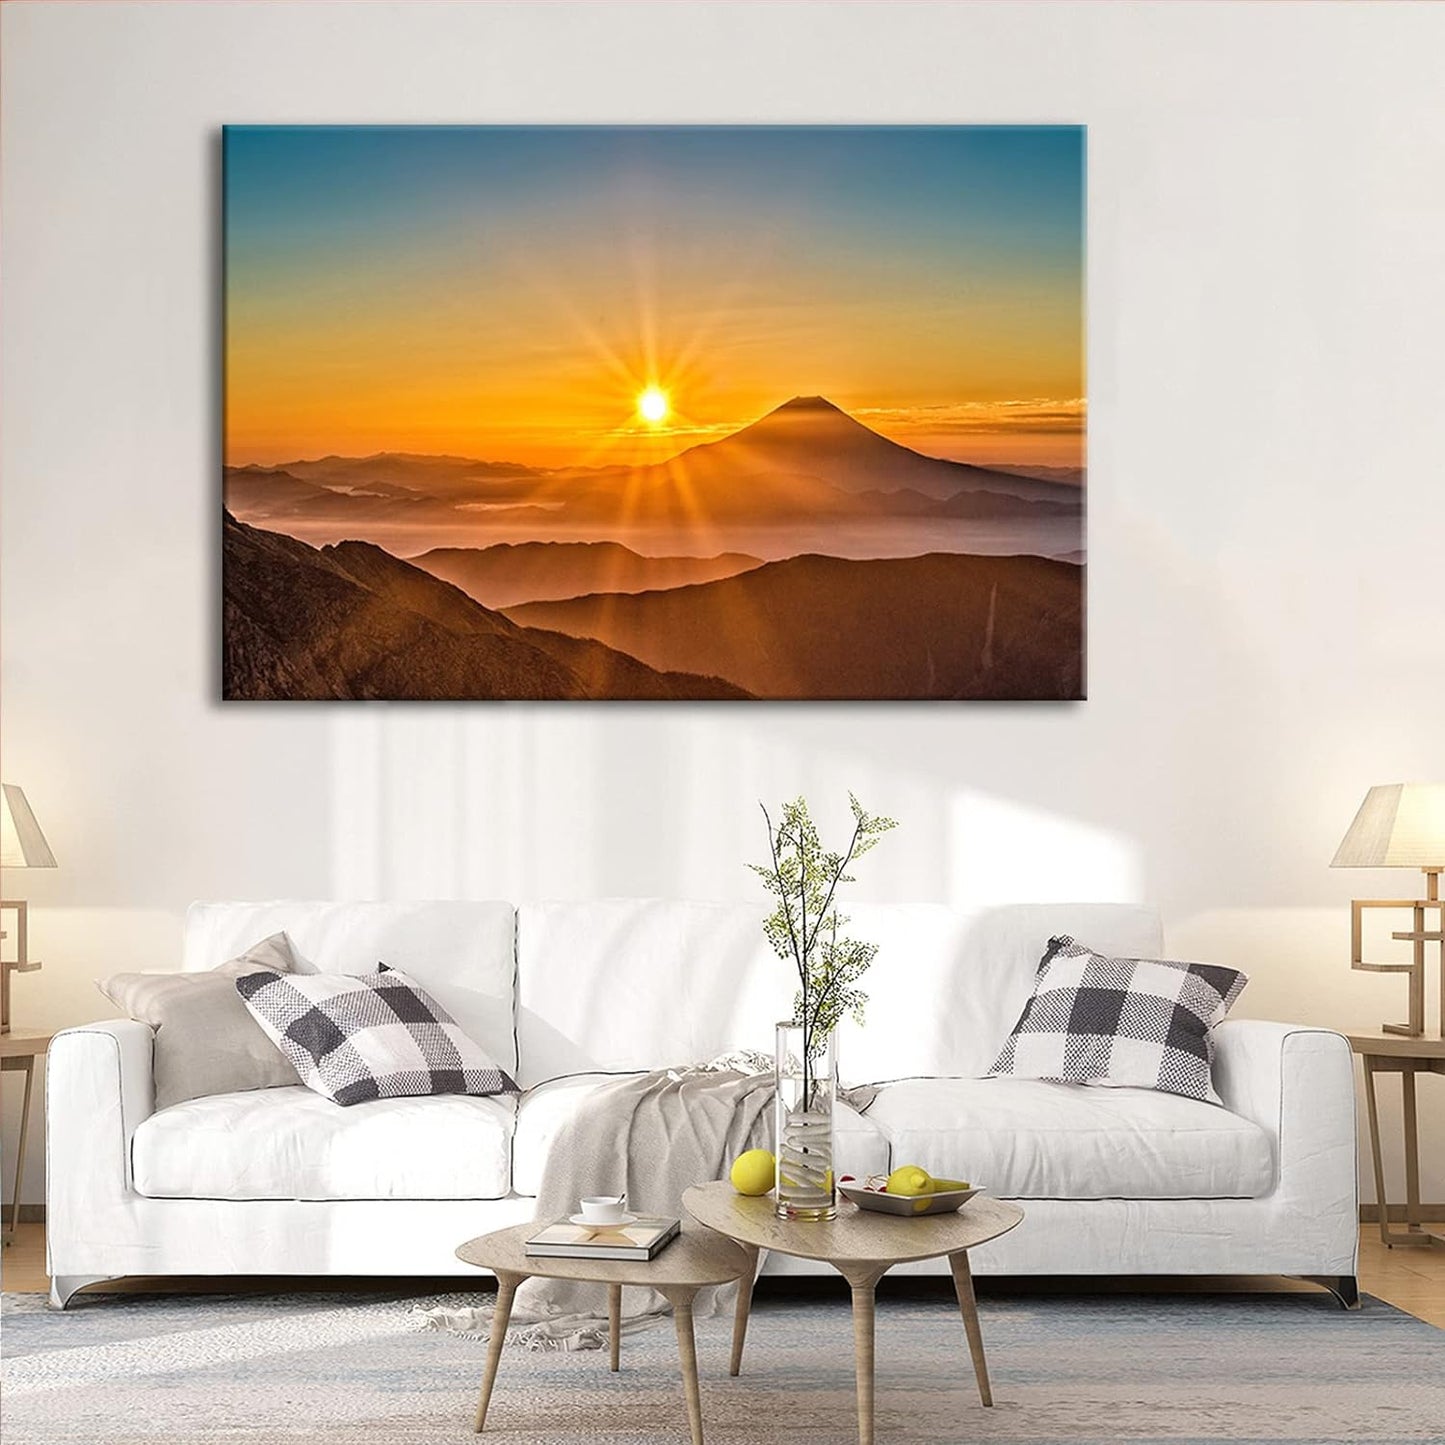 Brusheslife Wall Decor: Vibrant Sunrise over the Mountains Canvas Painting